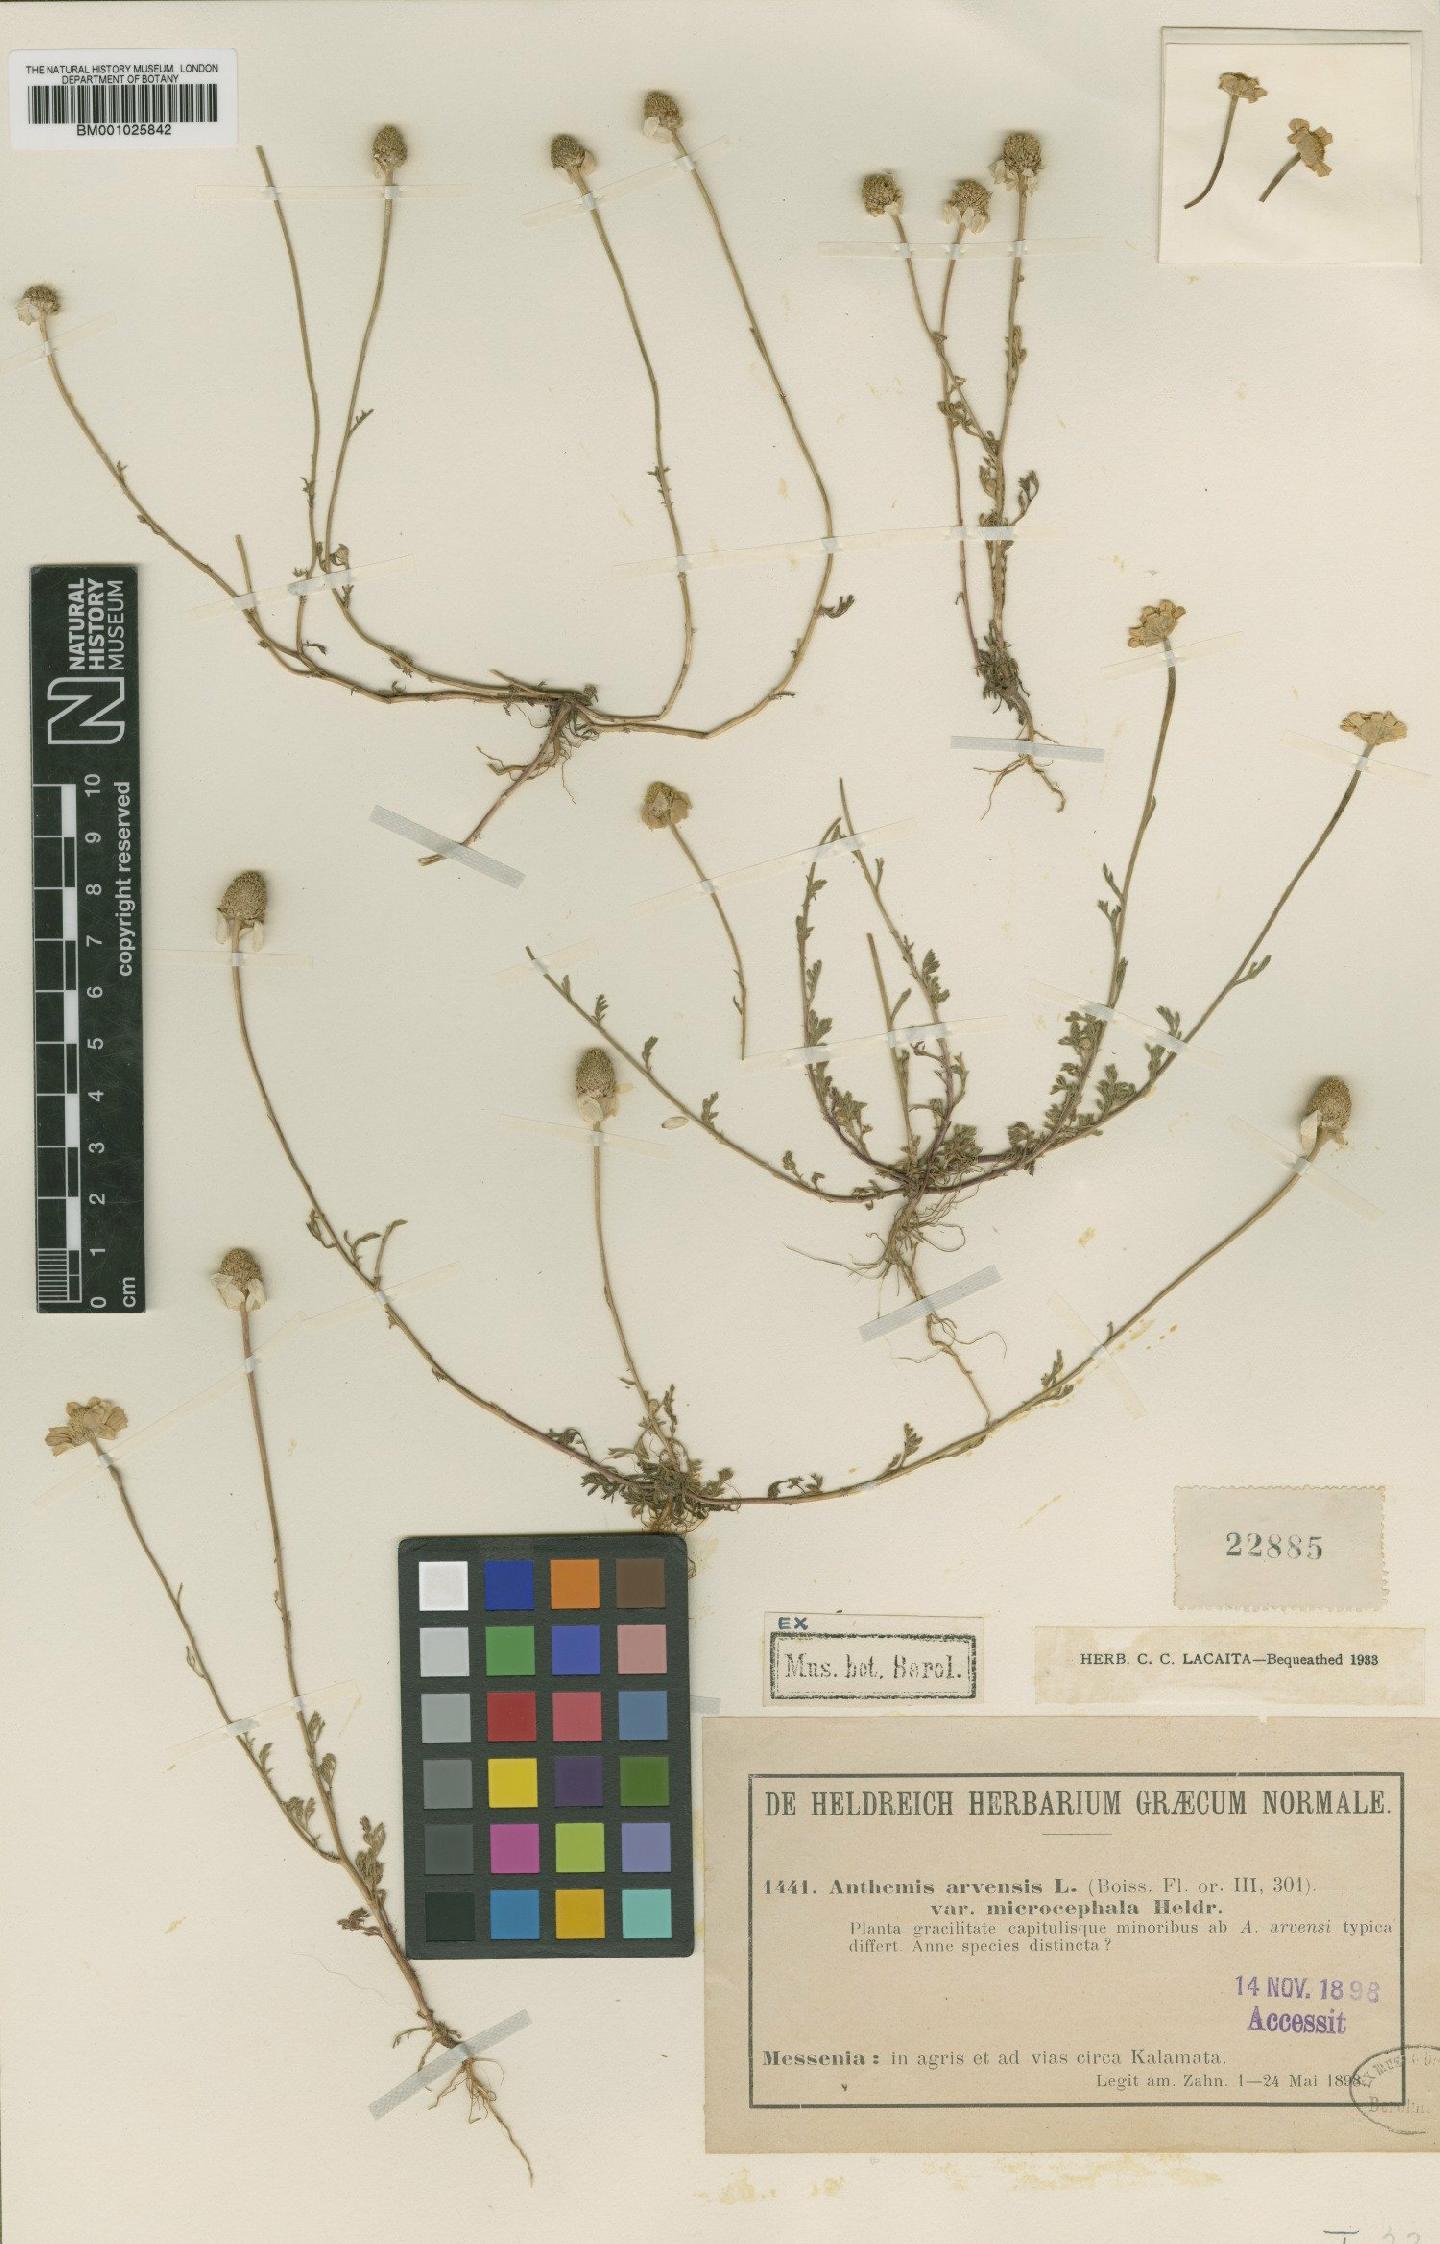 To NHMUK collection (Anthemis arvensis subsp. arvensis L.; Type; NHMUK:ecatalogue:1793900)